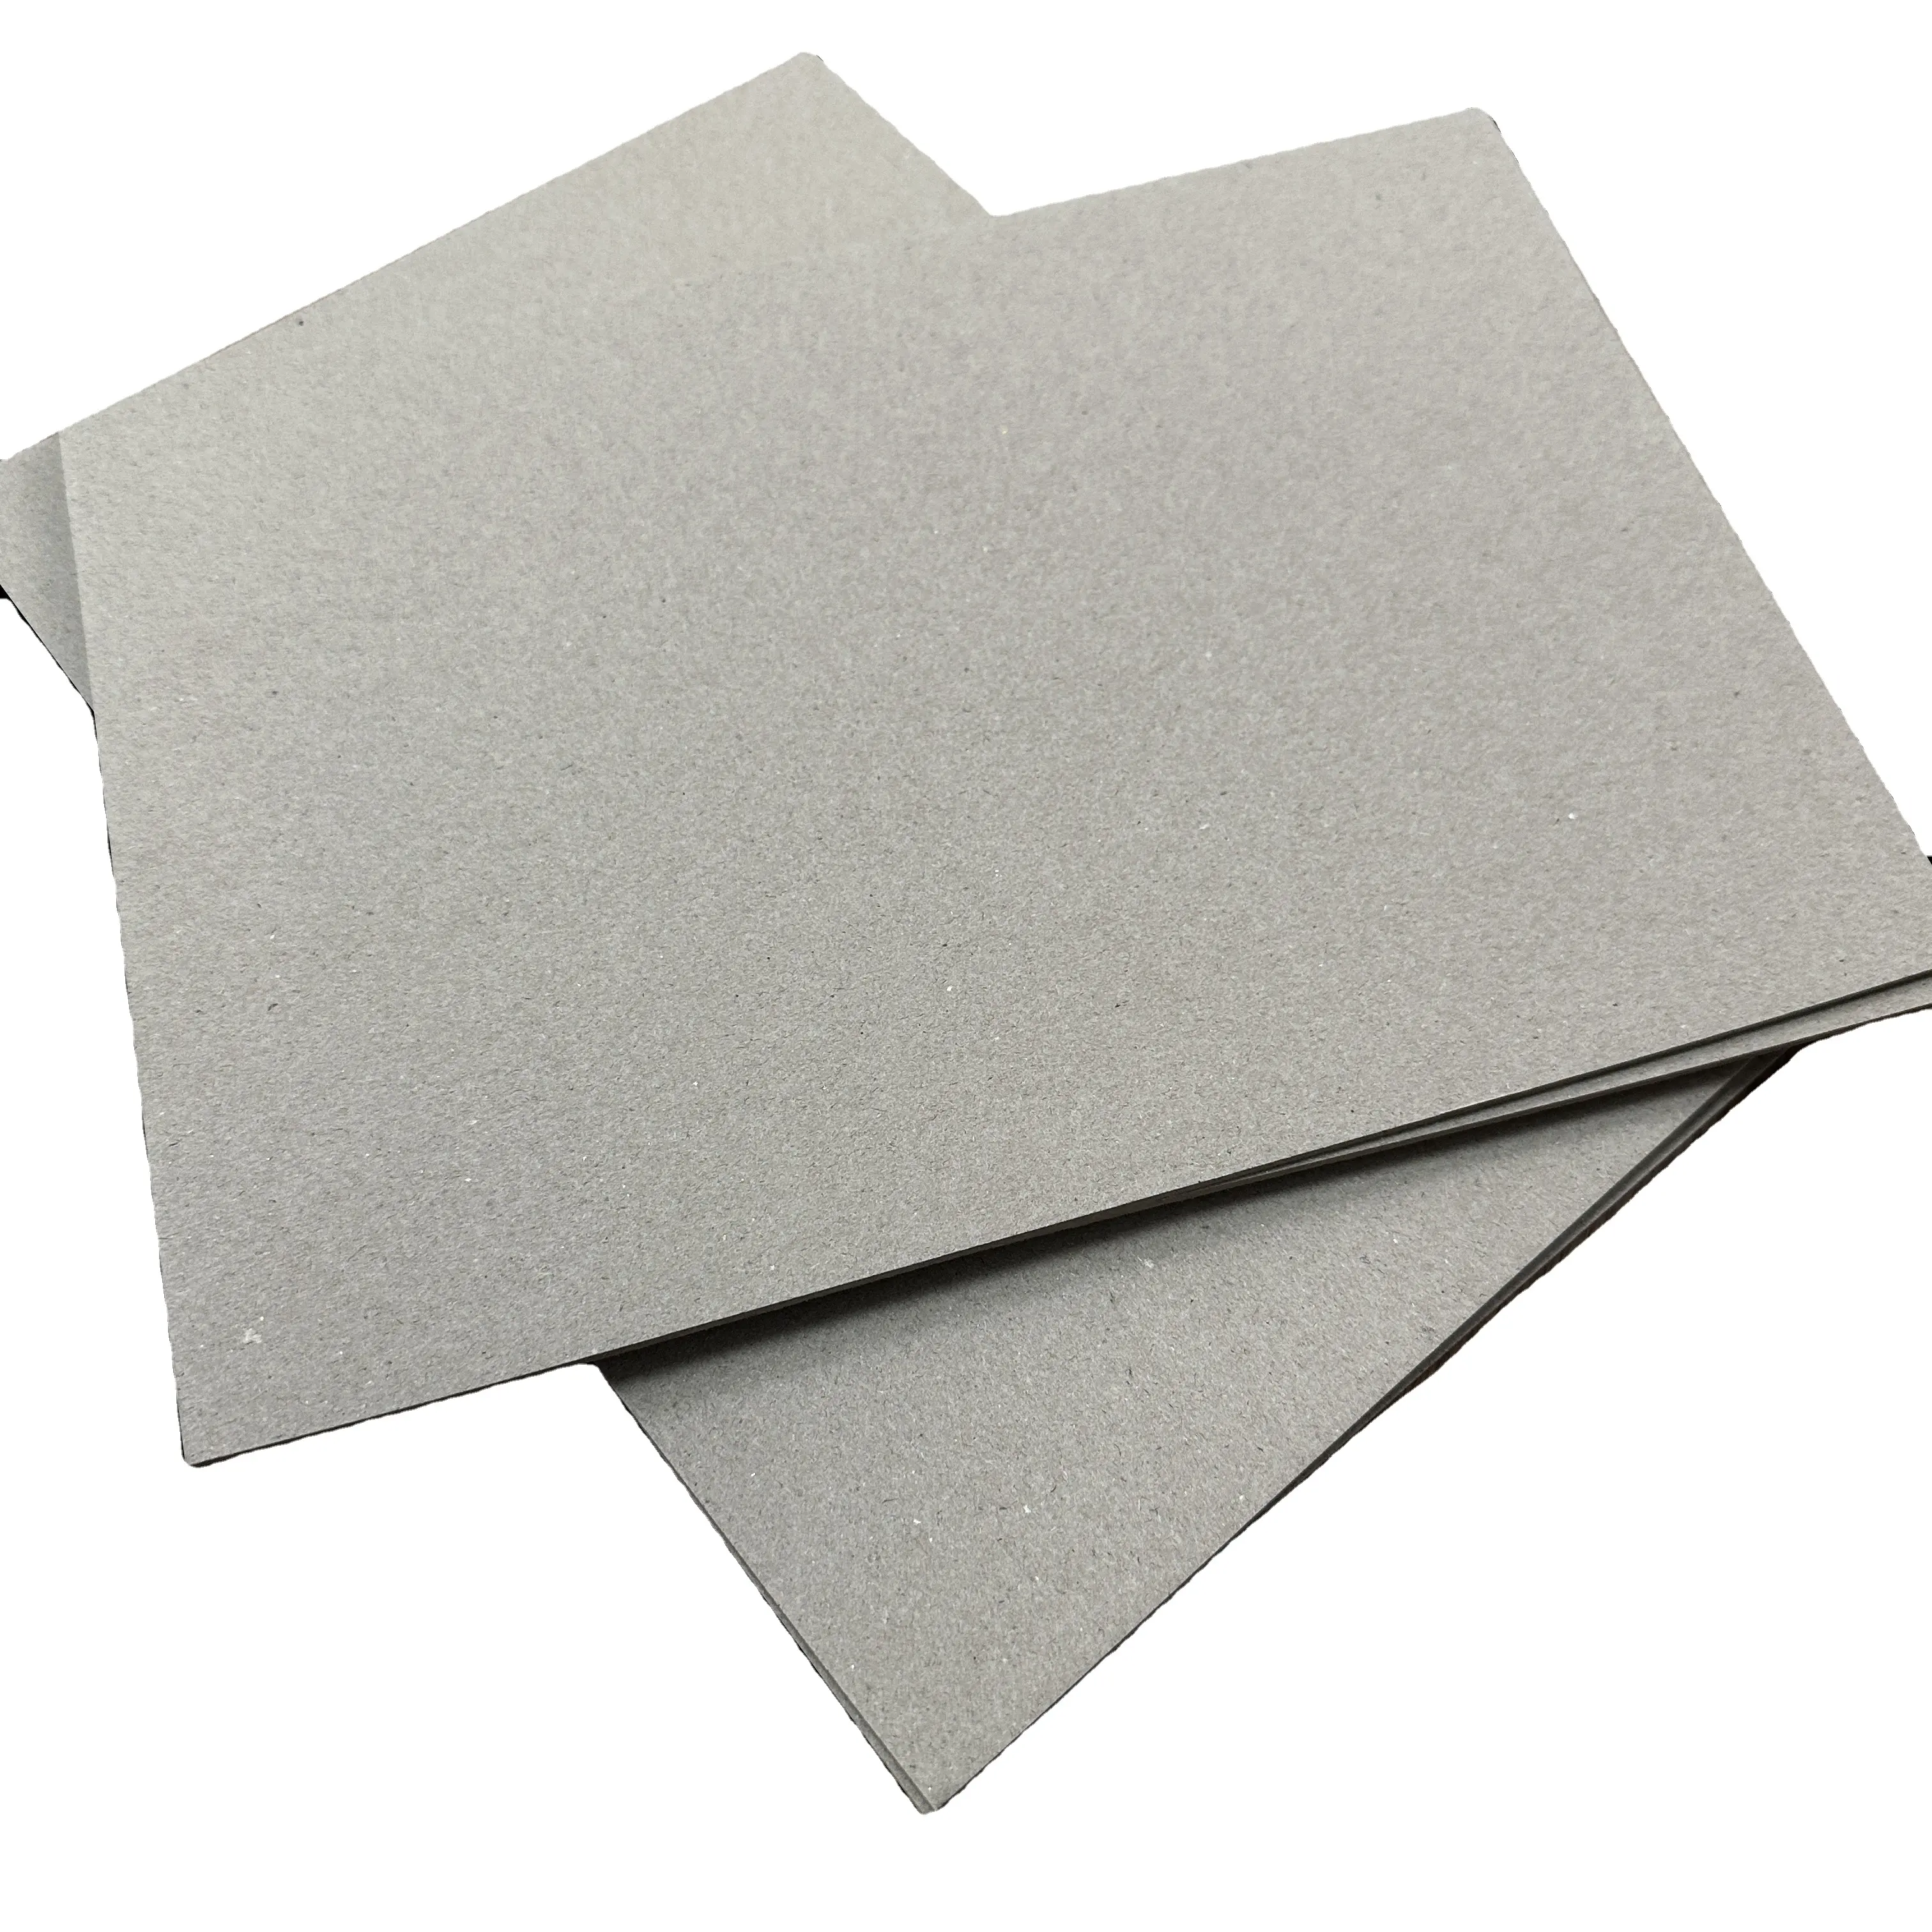 HK โรงงานกระดาษแข็งสีเทา450gsm 1600GSM/บอร์ดแกนแข็งสีเทาหนากระดาษแข็งสีเทา